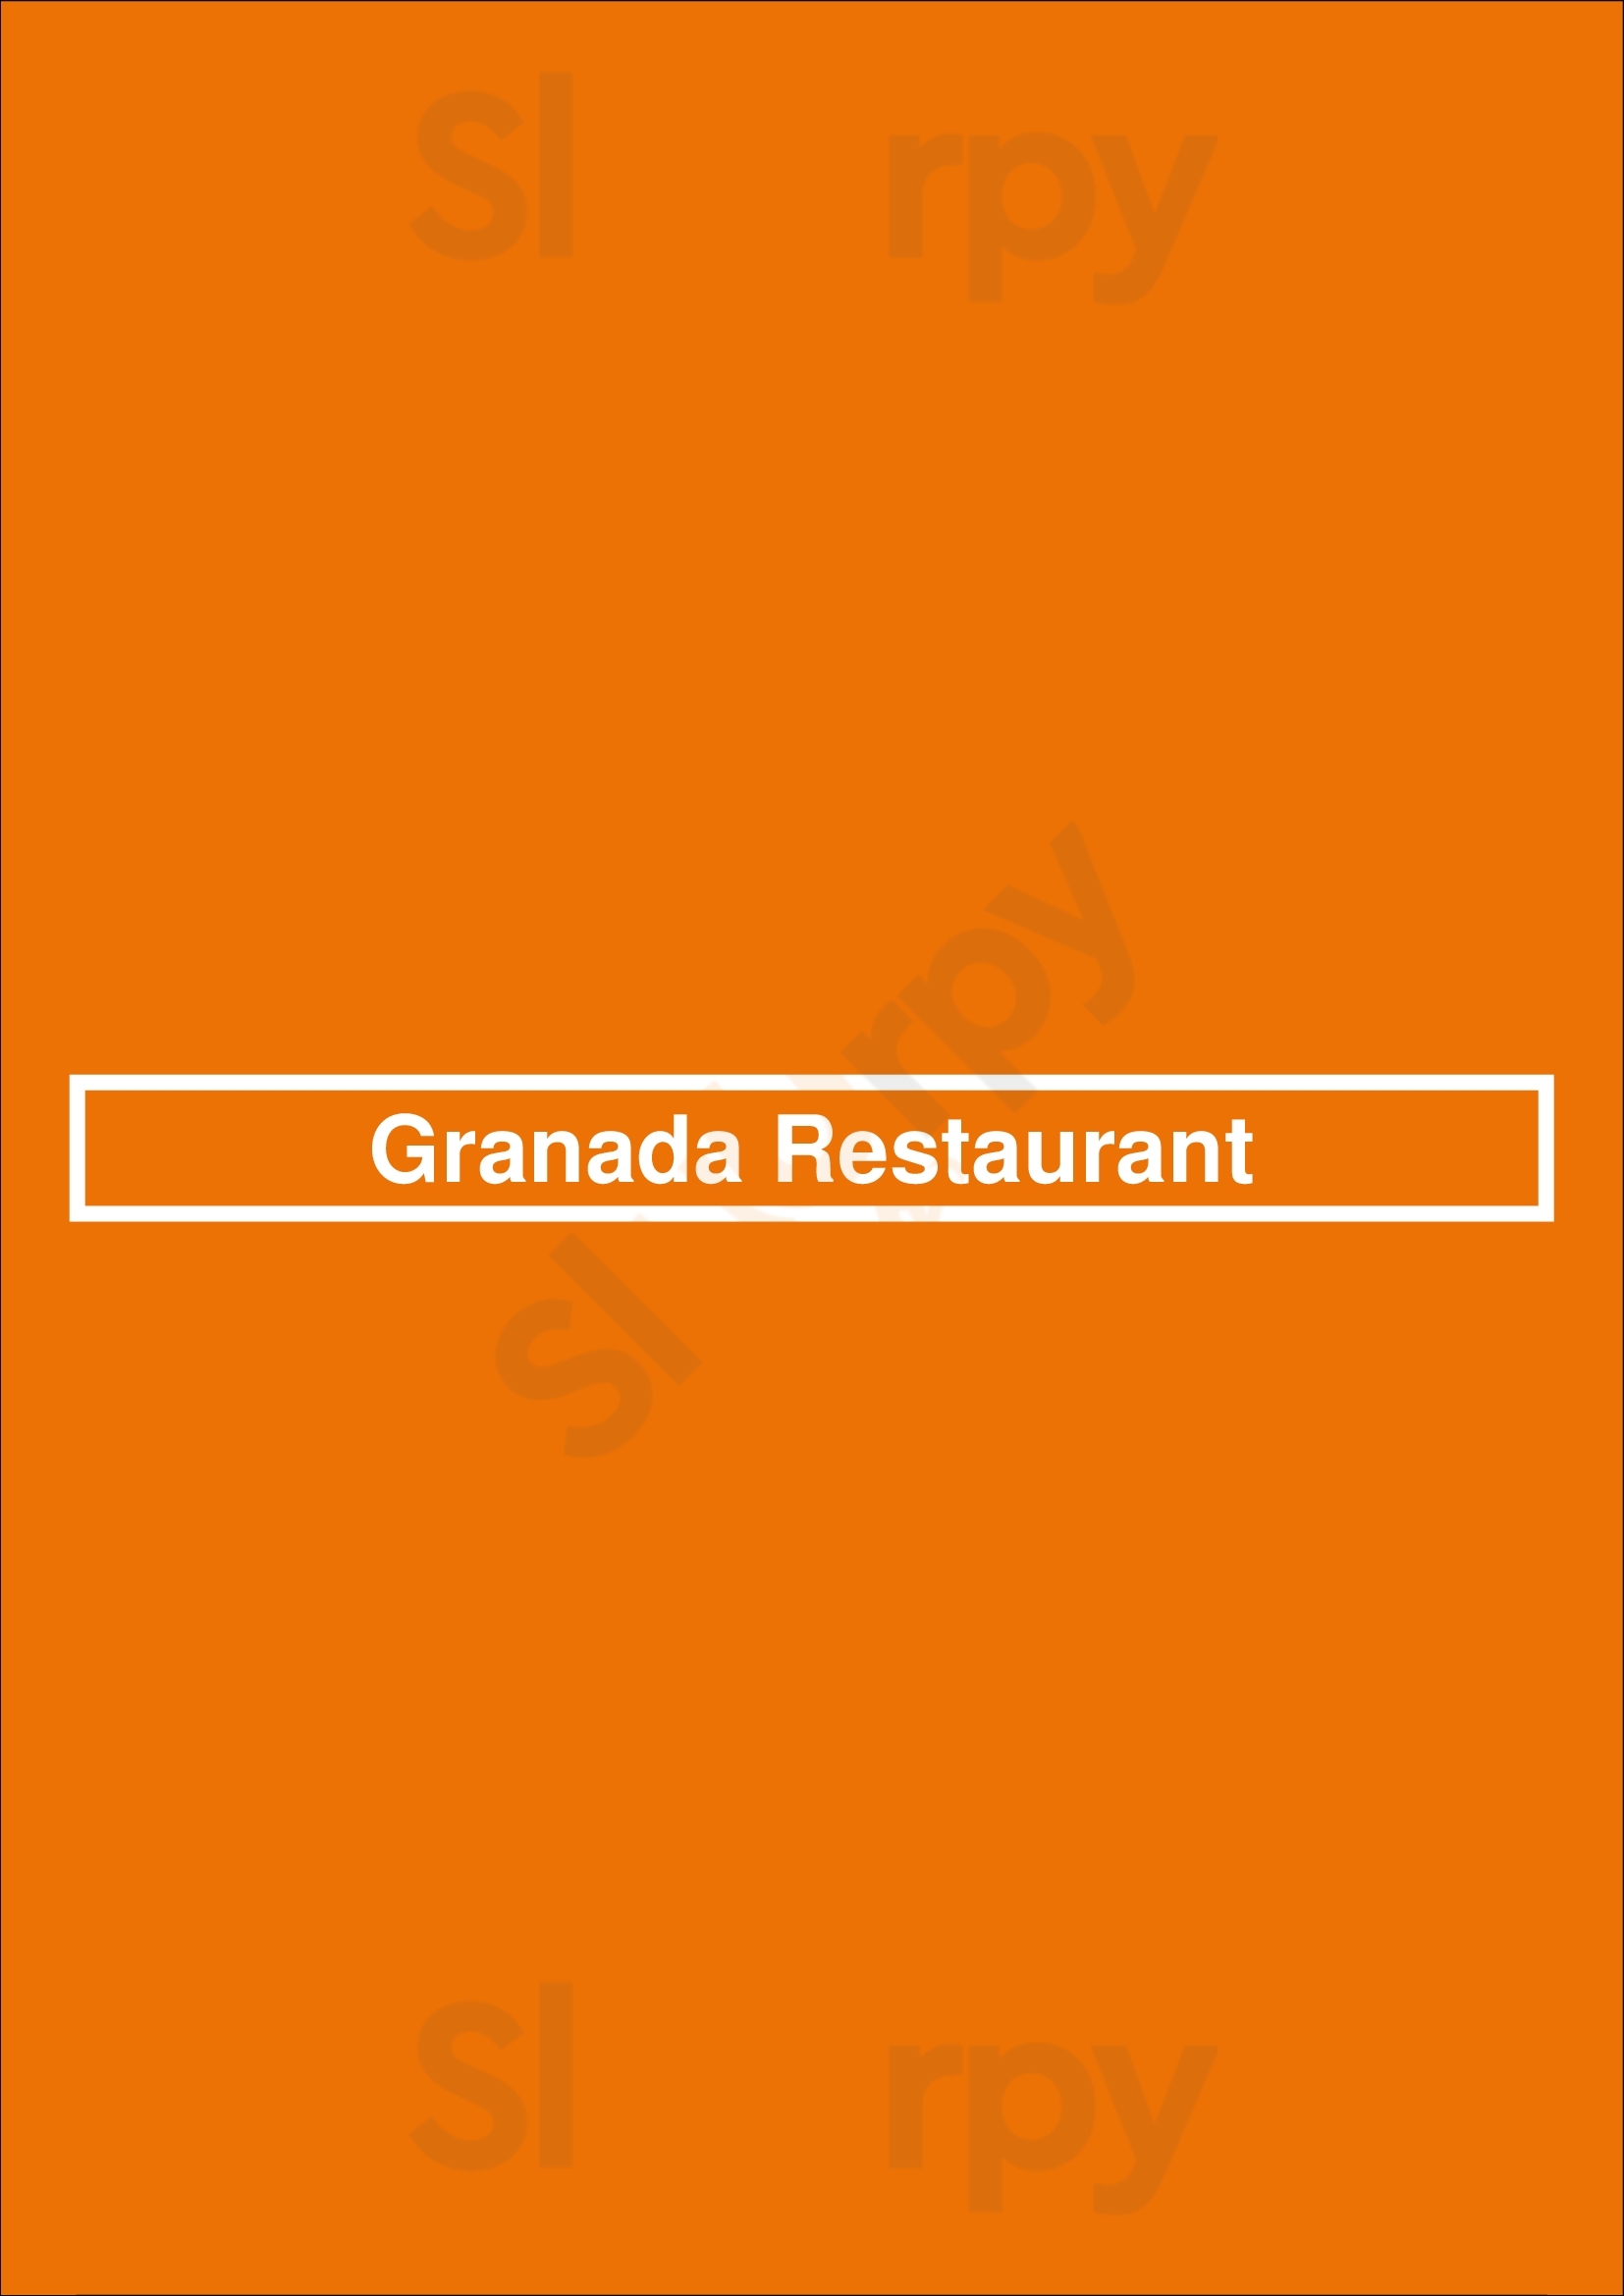 Granada Restaurant Amsterdam Menu - 1